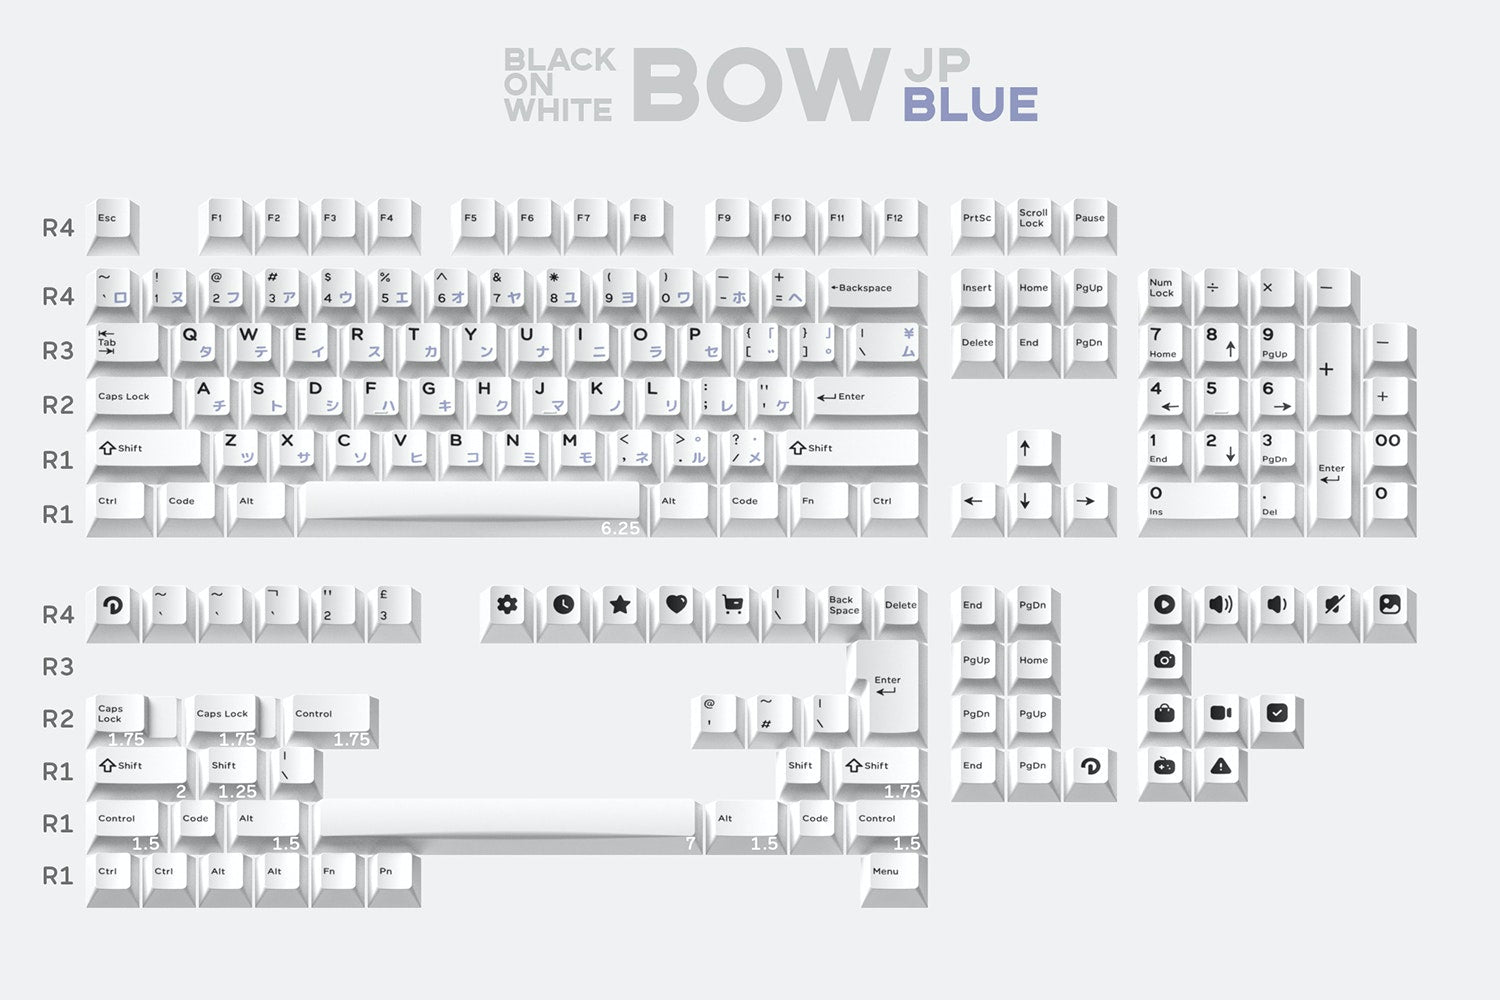 Domikey BOW Dye-Sub Cherry Profile Keycaps Set-Chosfox